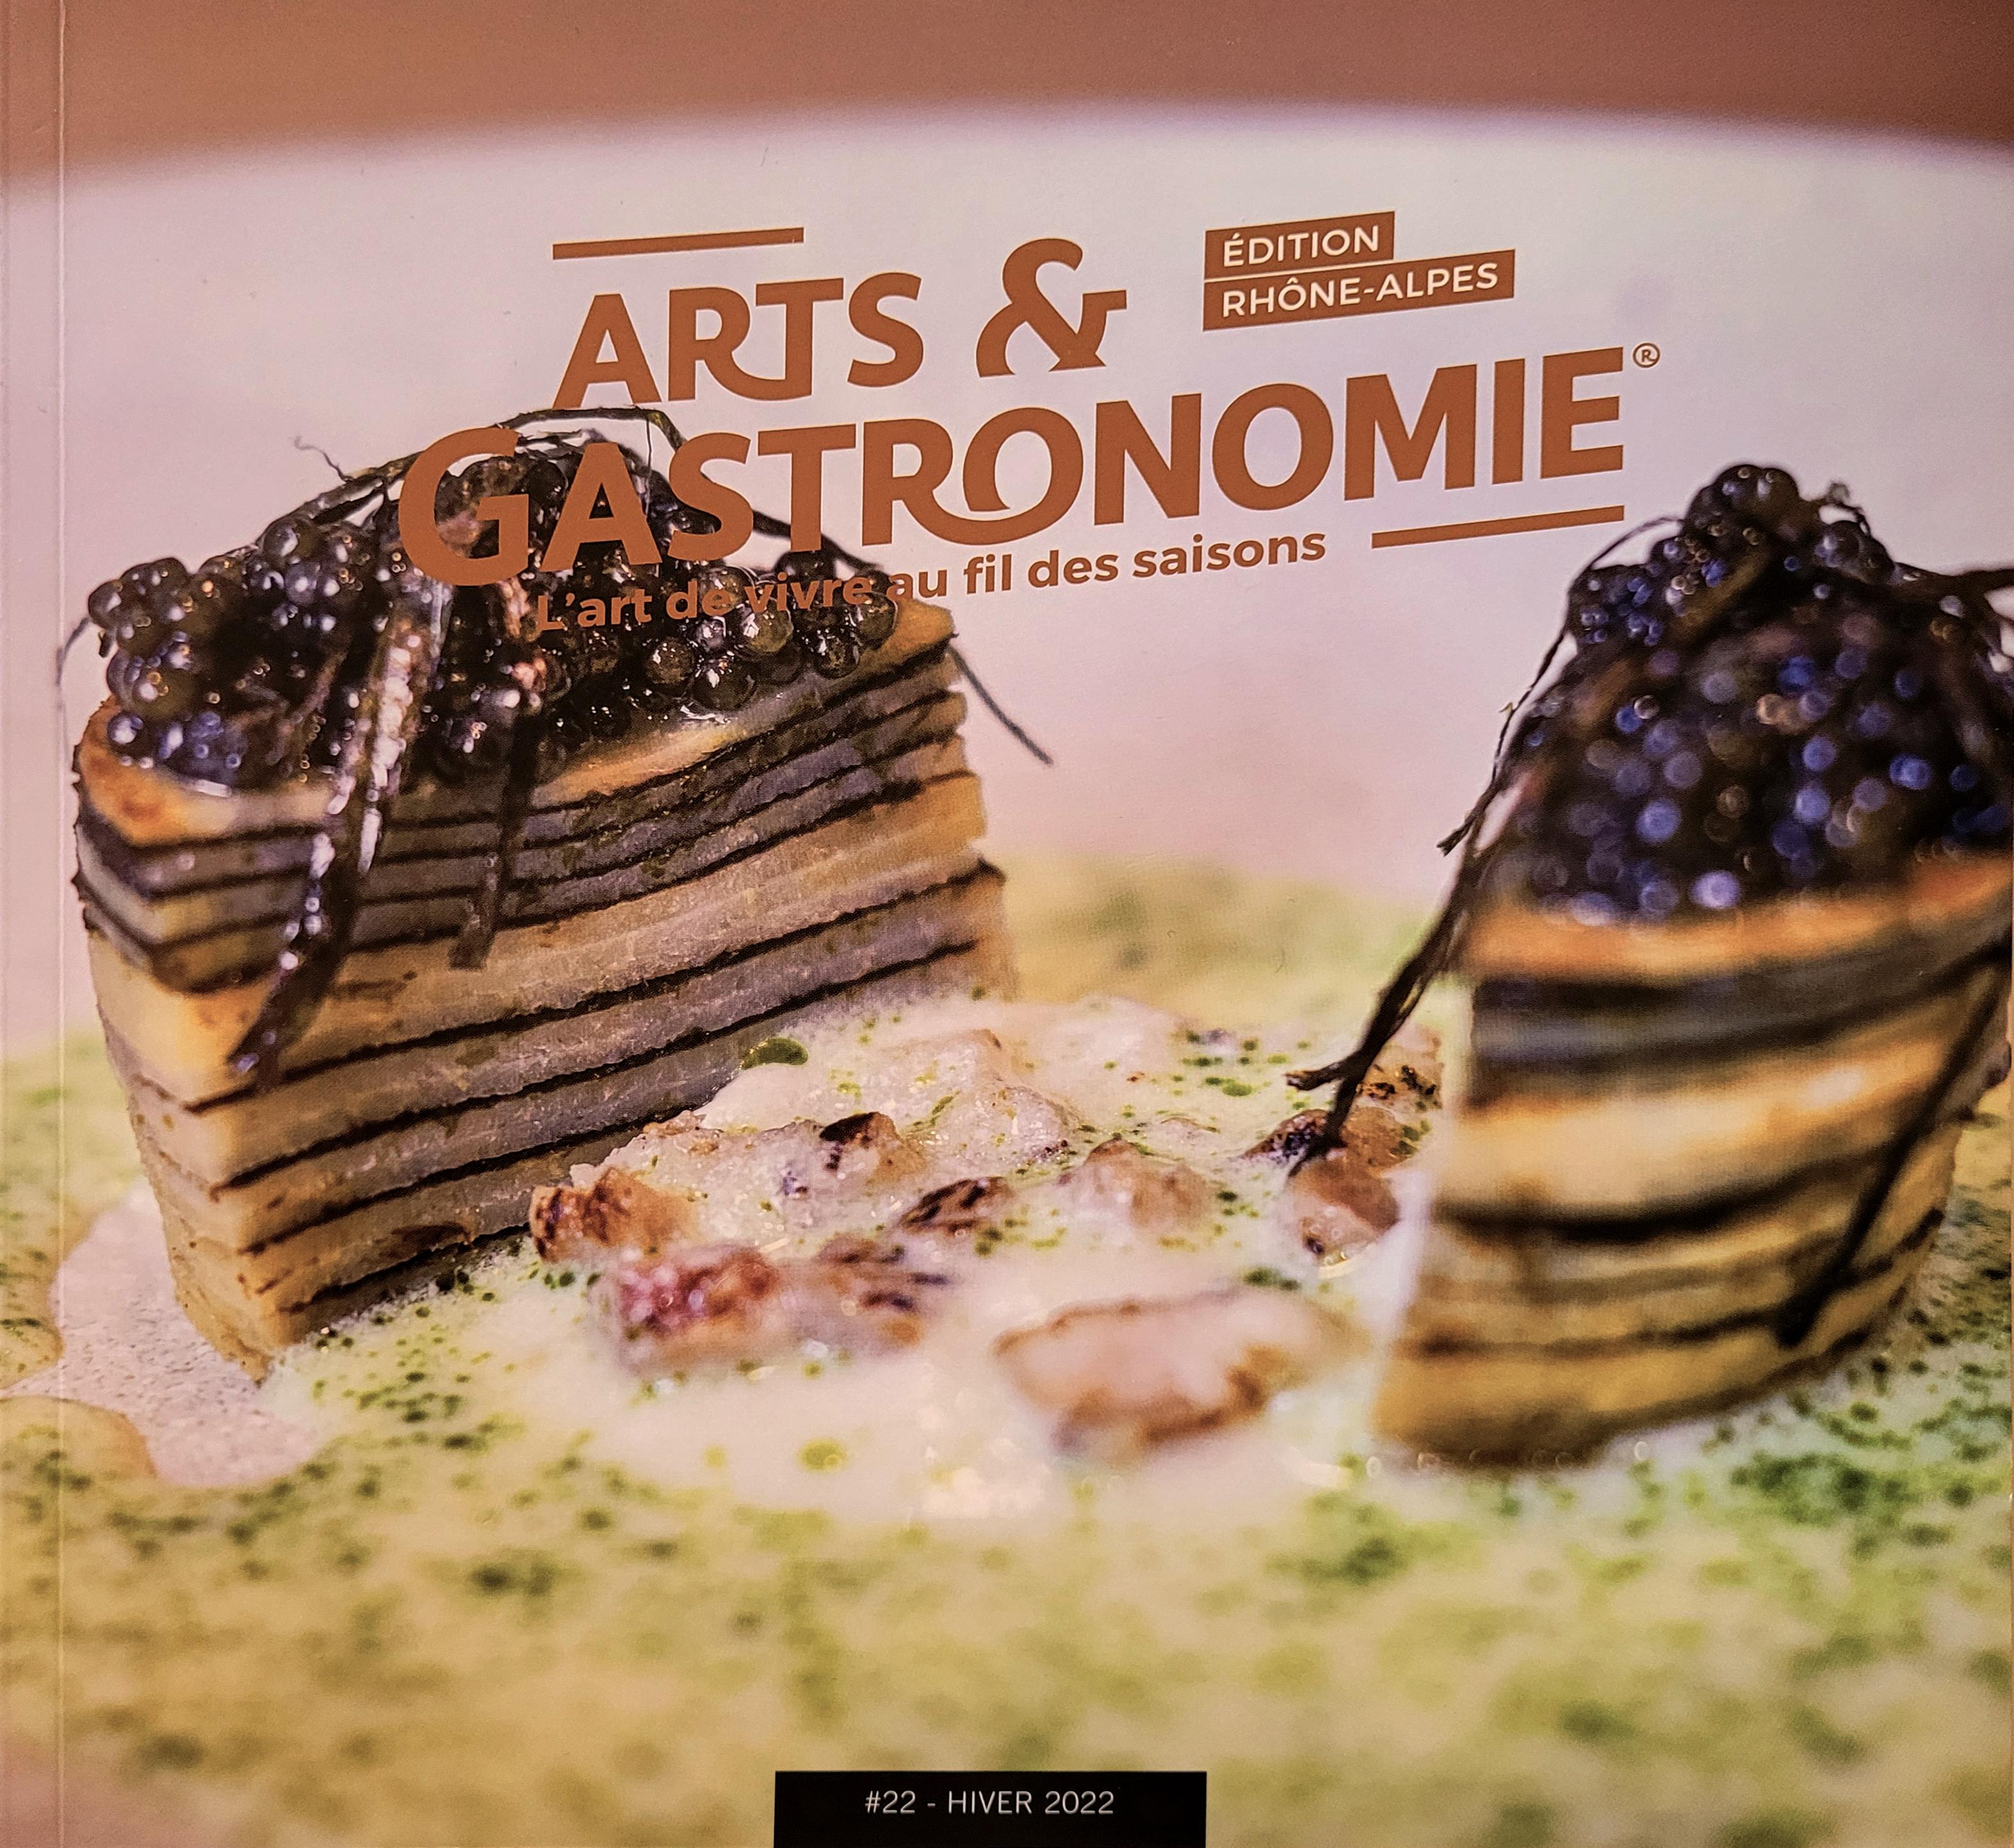 Arts & Gastronomie